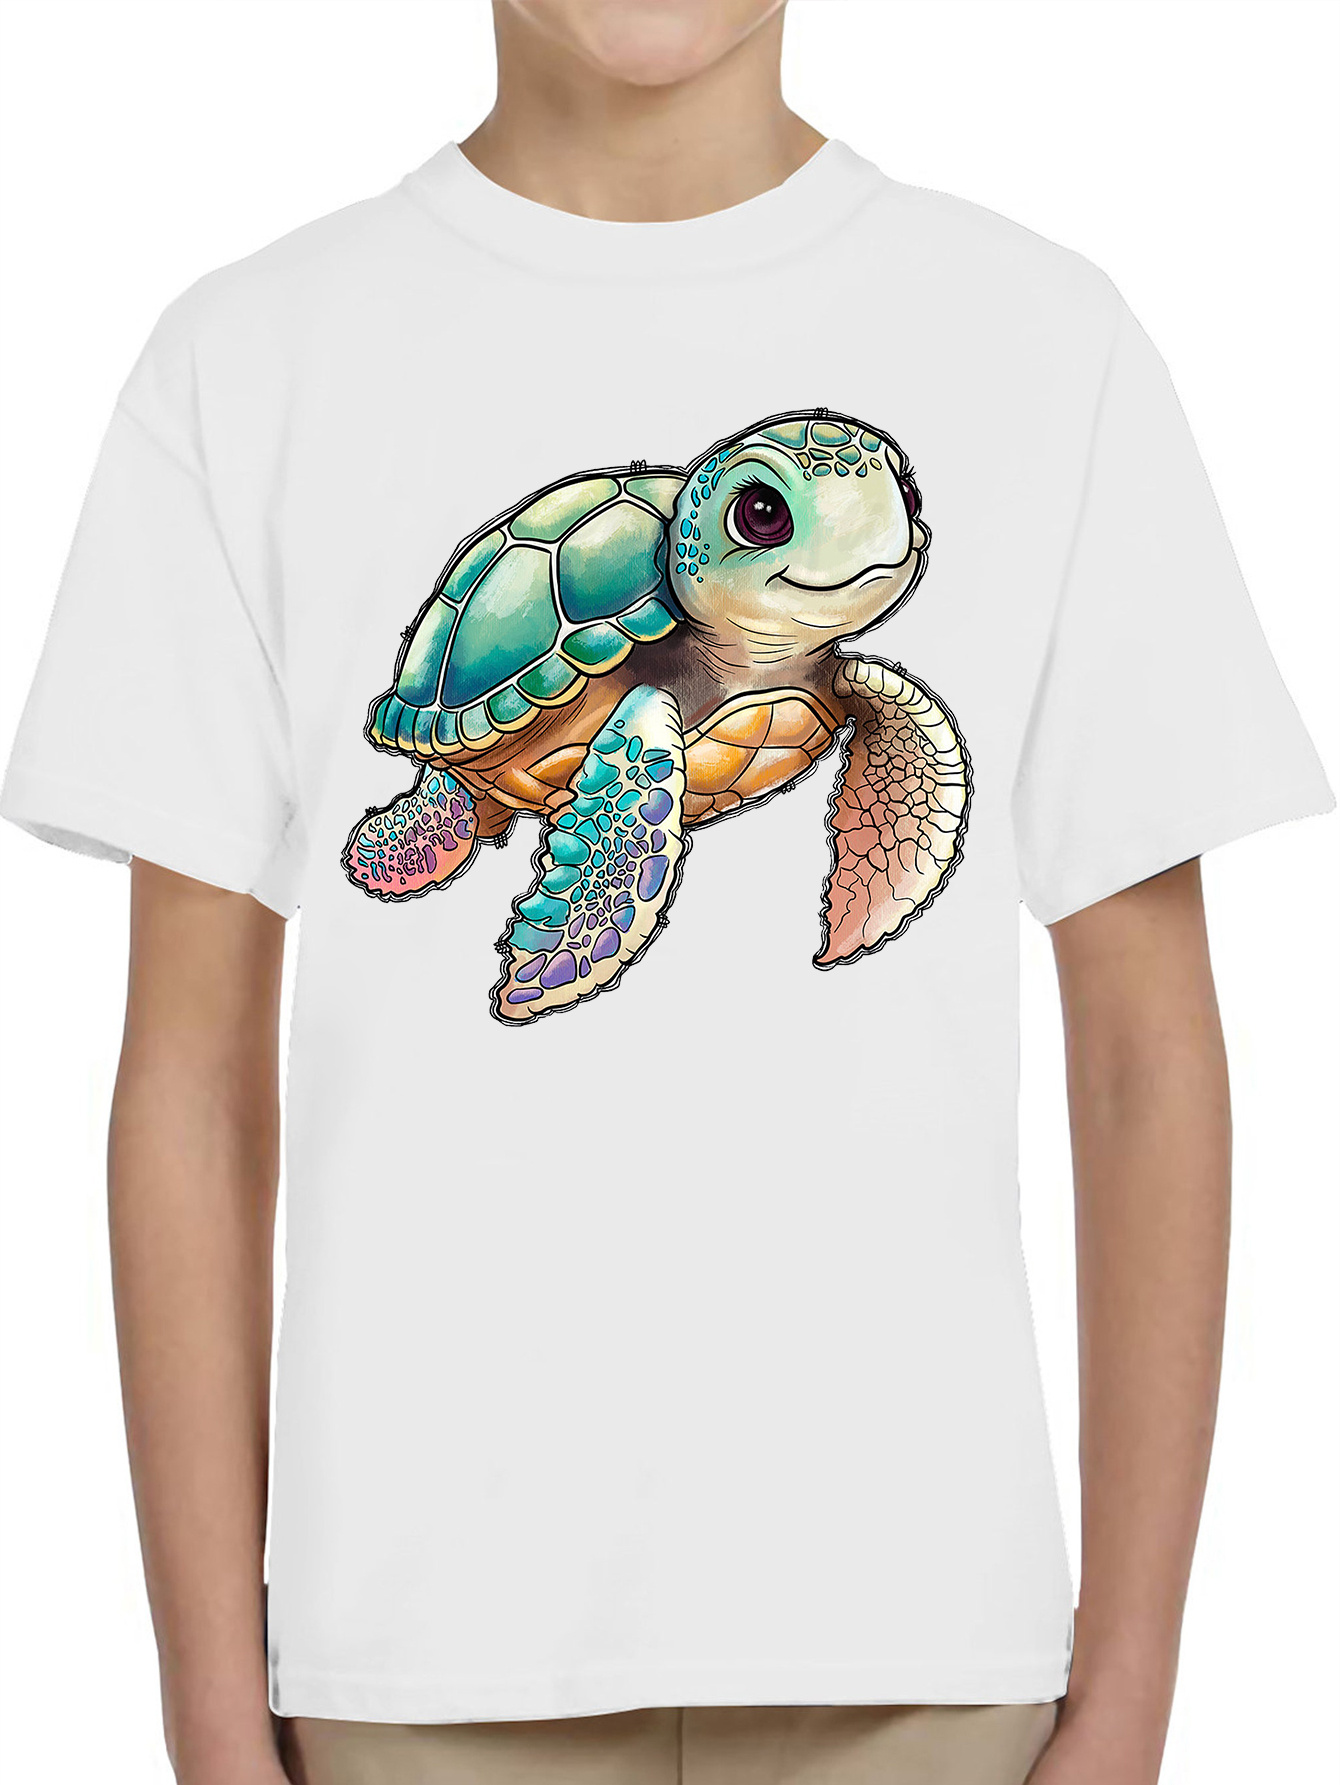 Boys T-shirt Crew Neck Short Sleeve Tee Top Turtle Print